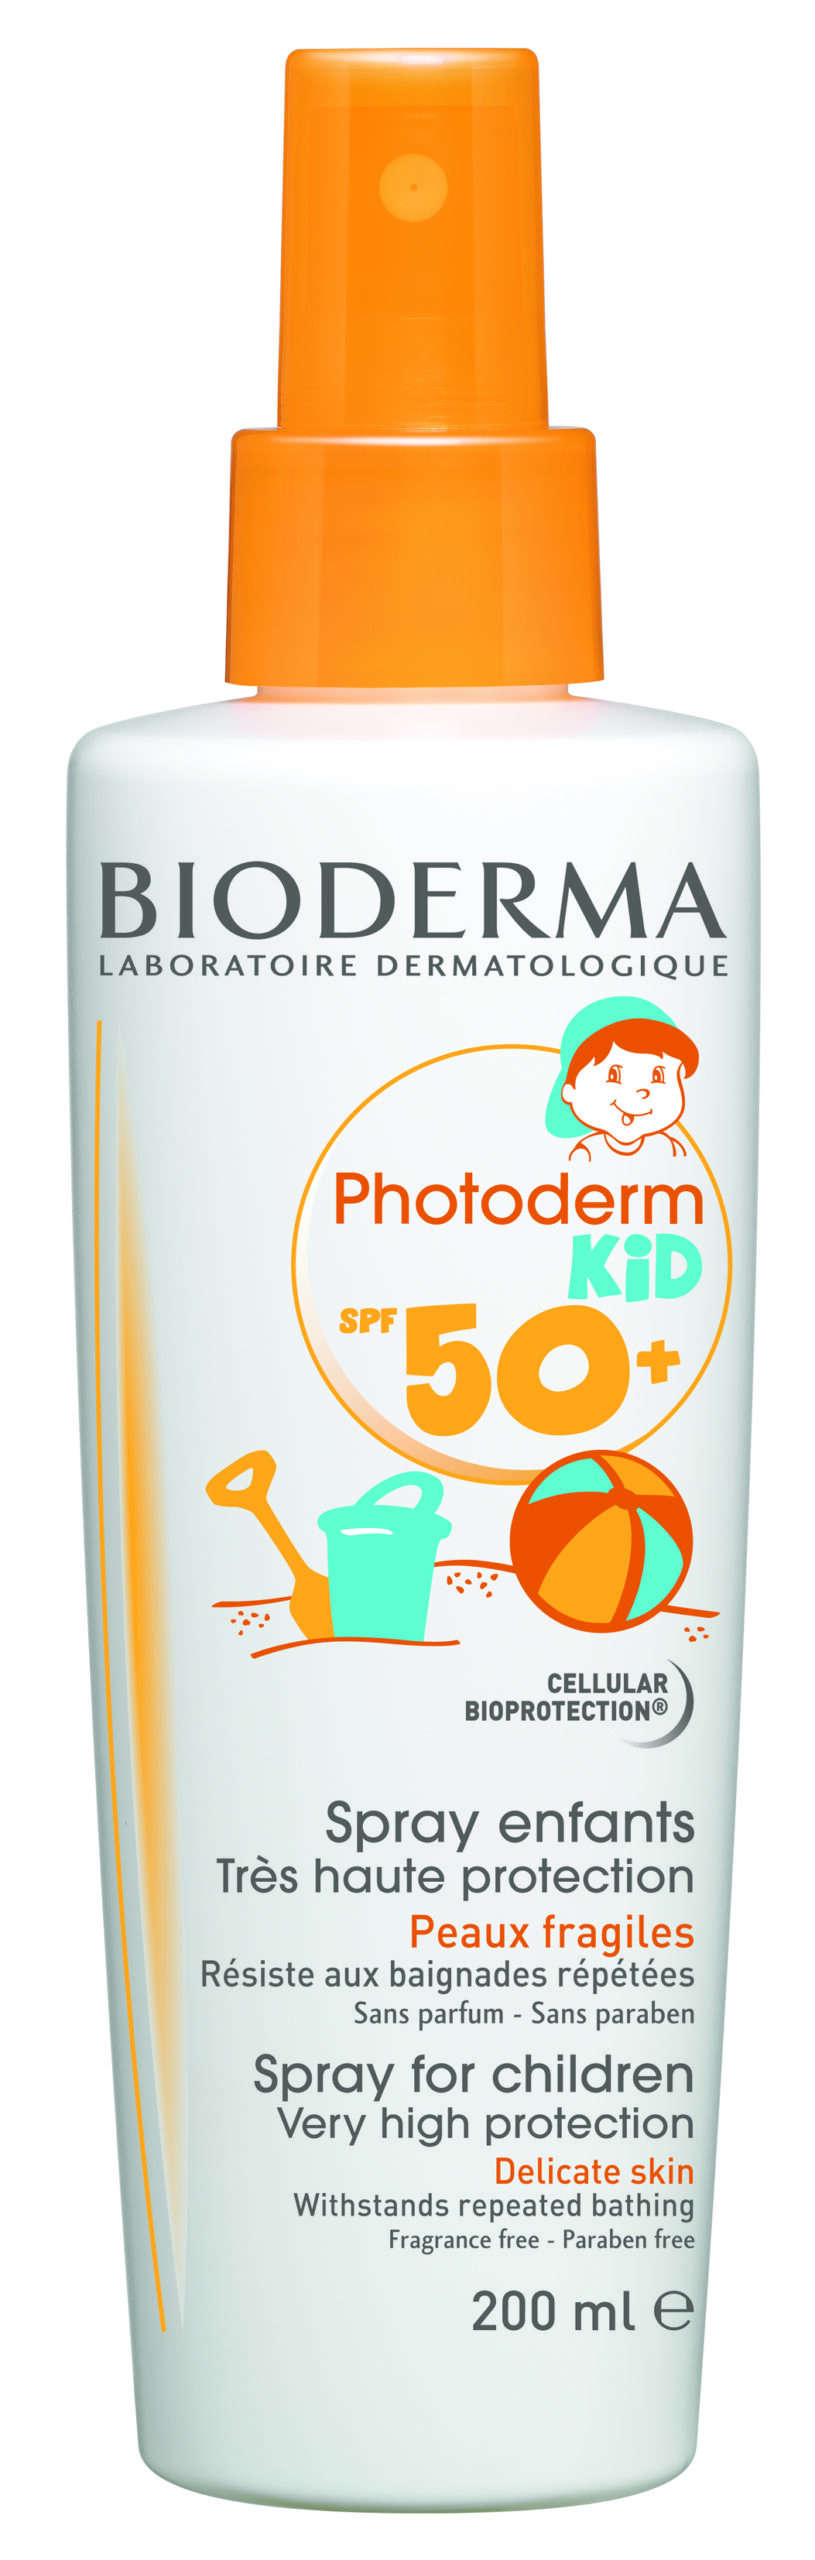 BIODERMA PHOTODERM KID SPRAY SPF50+ 200ML